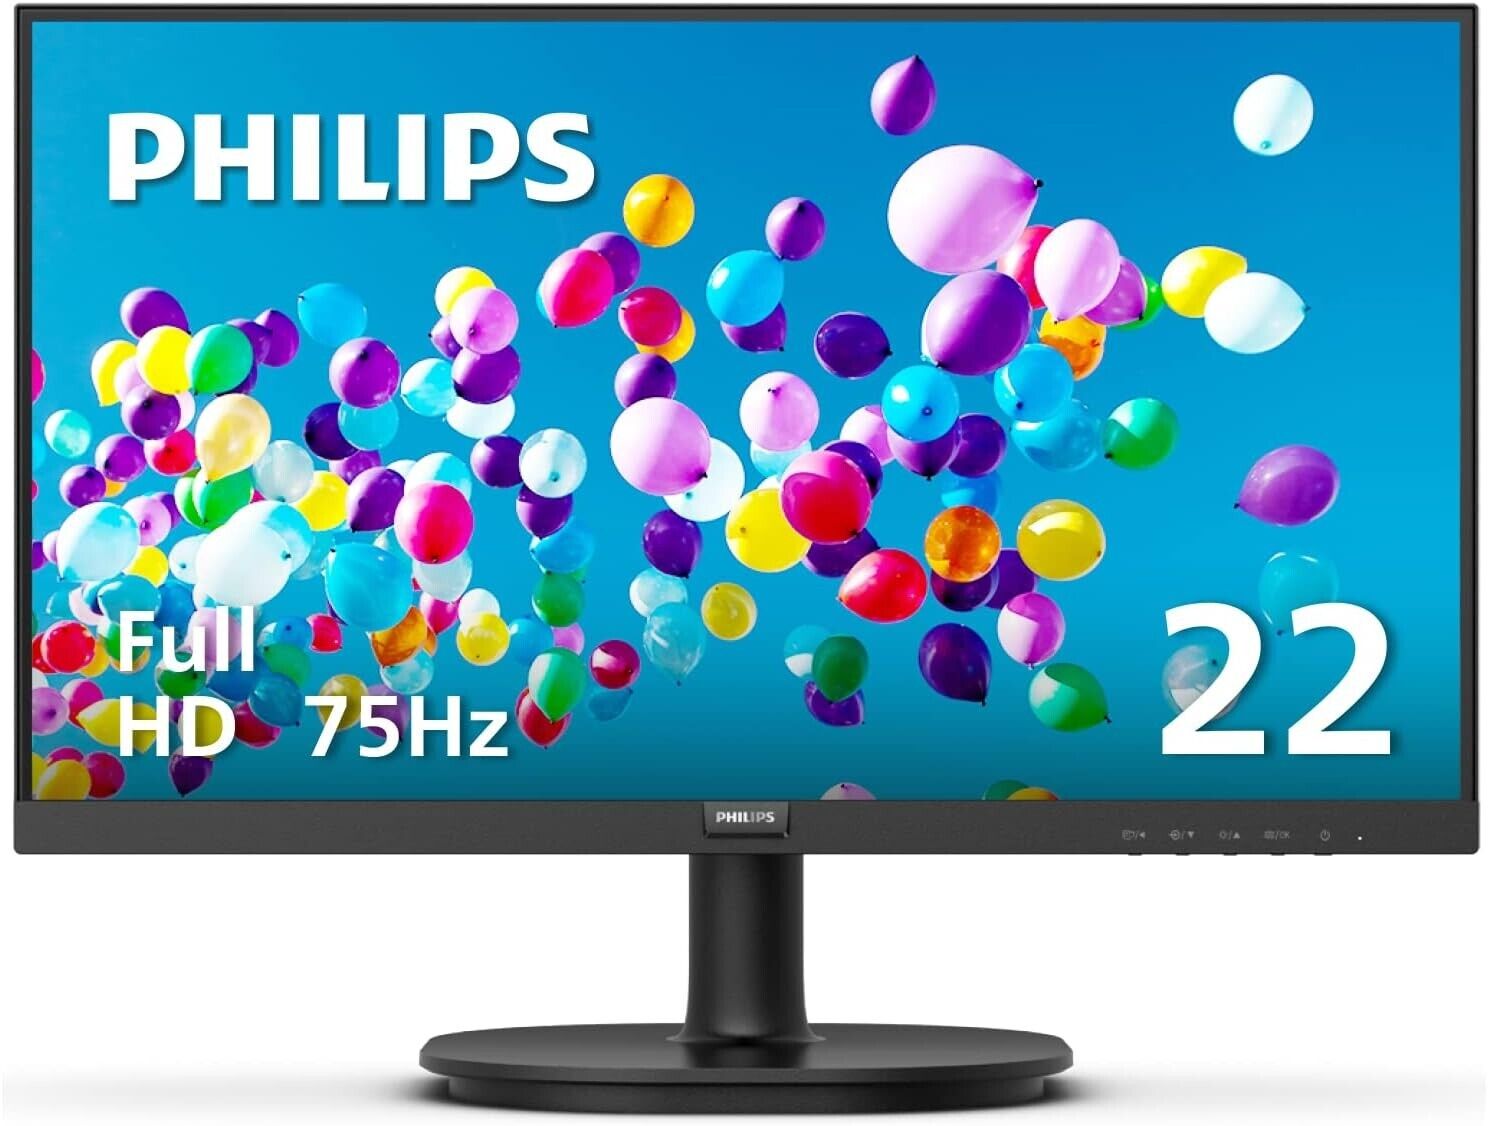 PHILIPS 22” Class Thin Full HD (1920 x 1080) 75Hz Computer Monitor